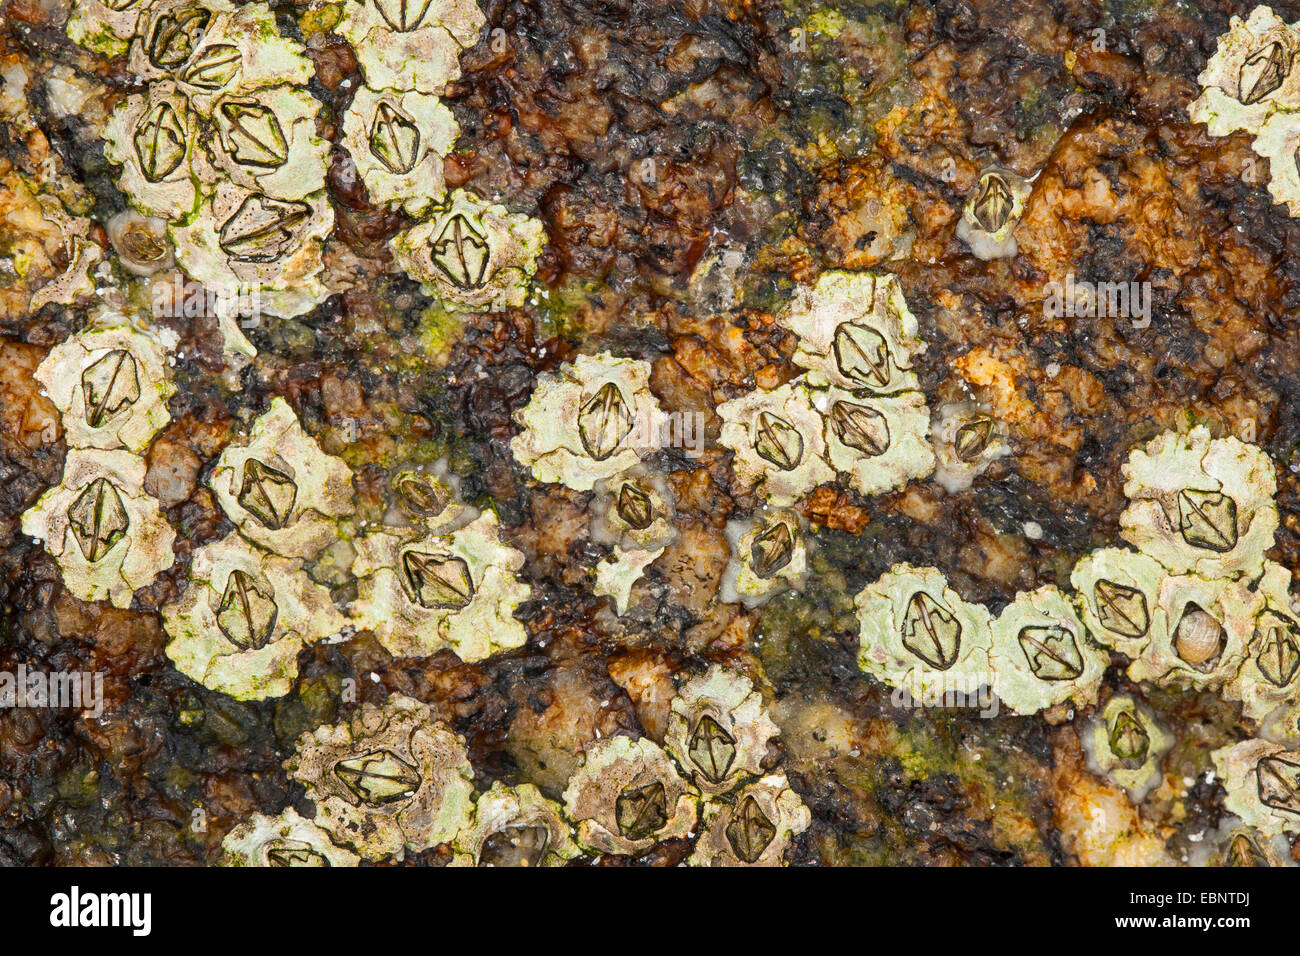 Modest barnacle (Elminius modestus), adhere on a rock at the coast, Germany Stock Photo